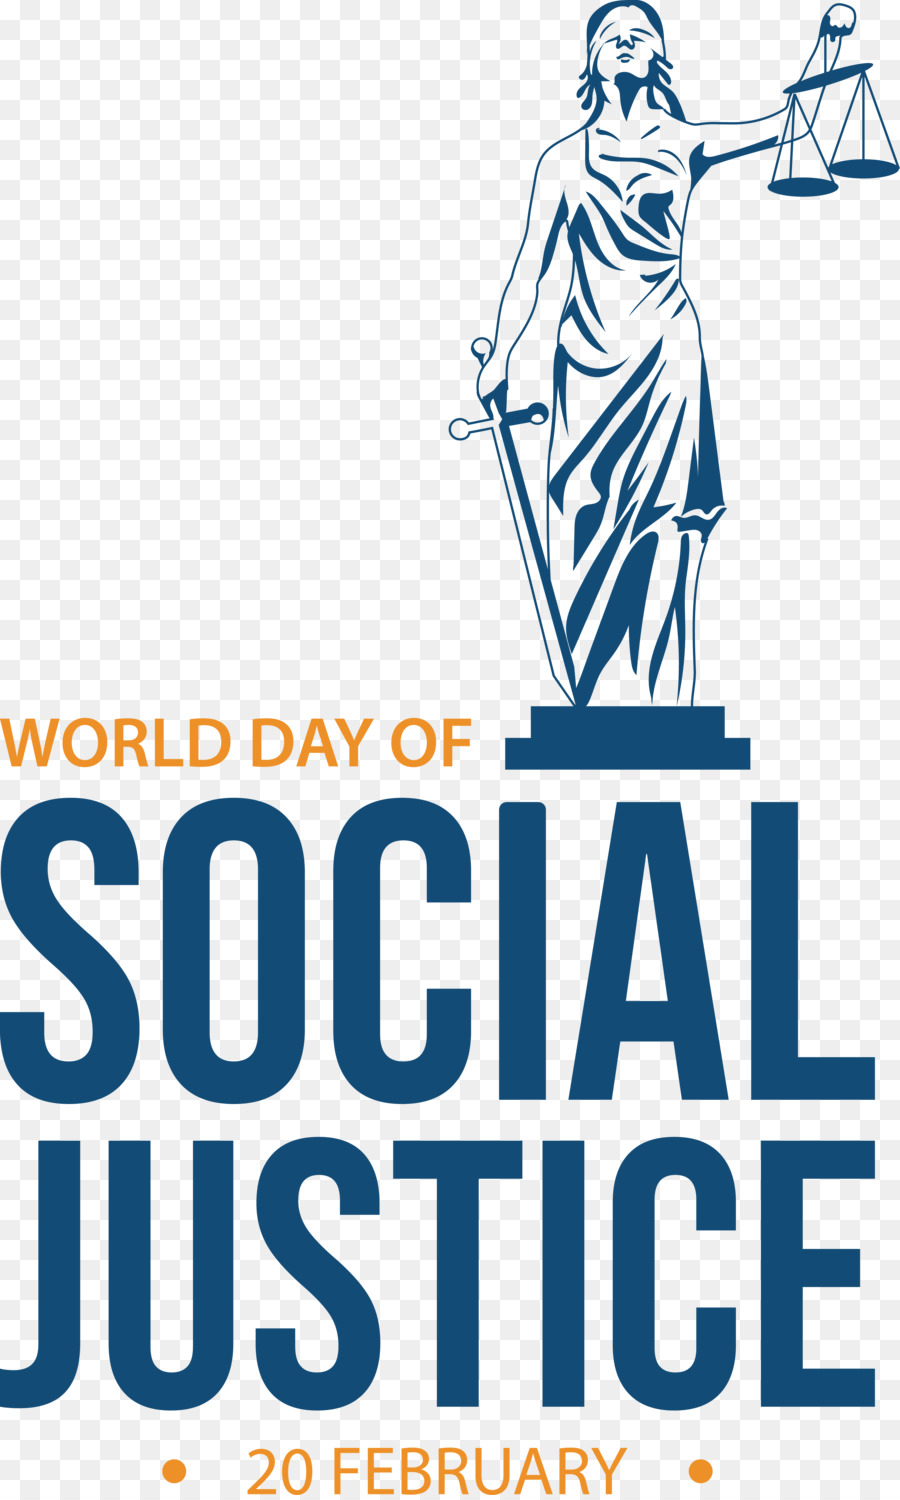 Hari Dunia Bagi Keadilan Sosial，Keadilan Sosial PNG